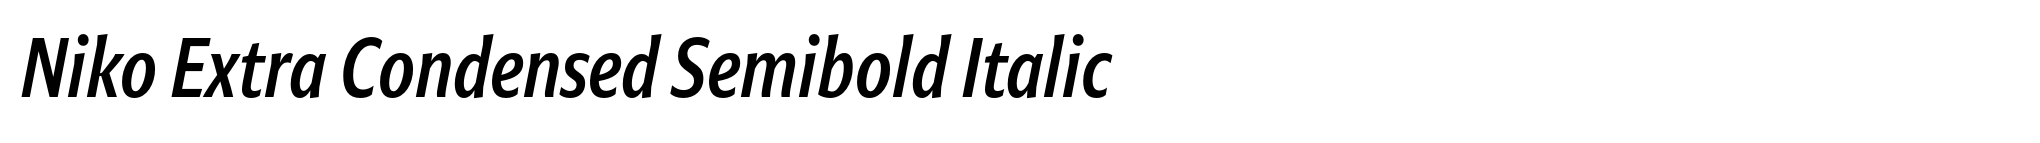 Niko Extra Condensed Semibold Italic image